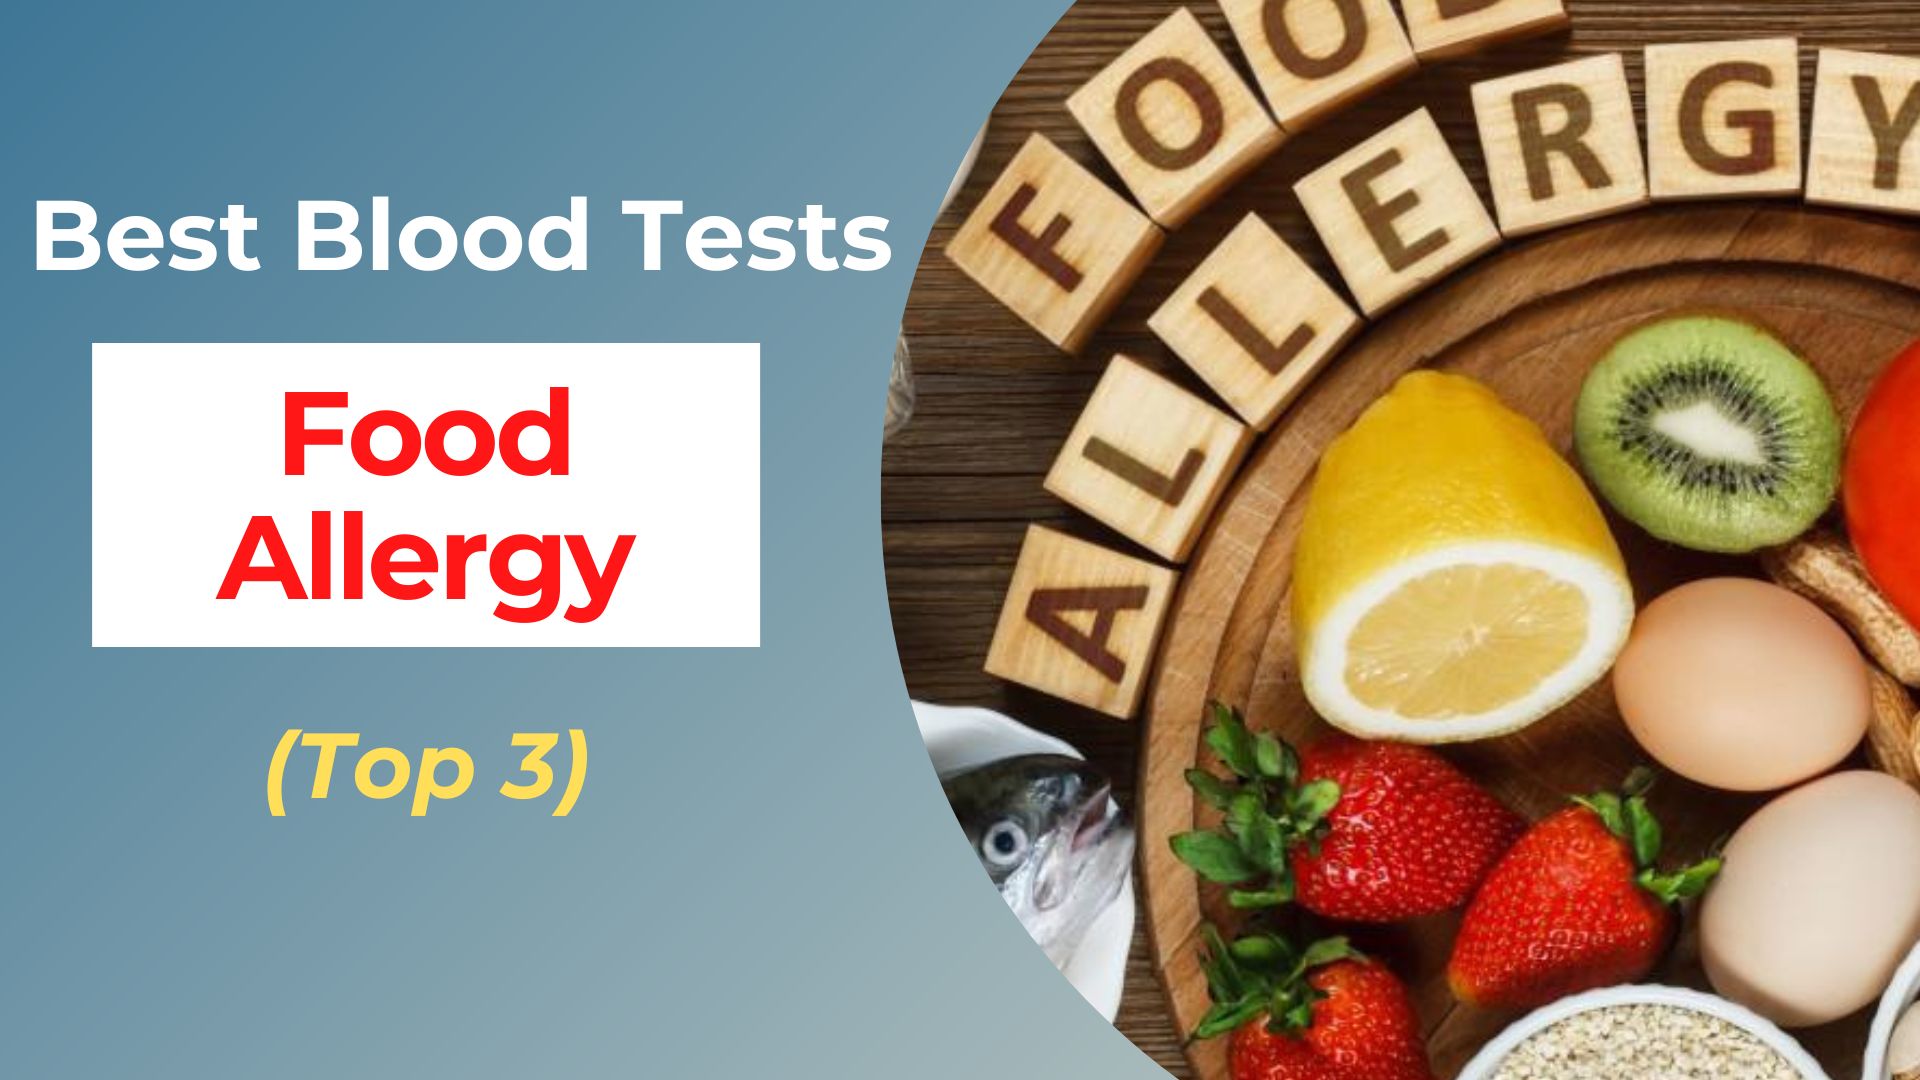 Best Blood Tests For Food Allergy